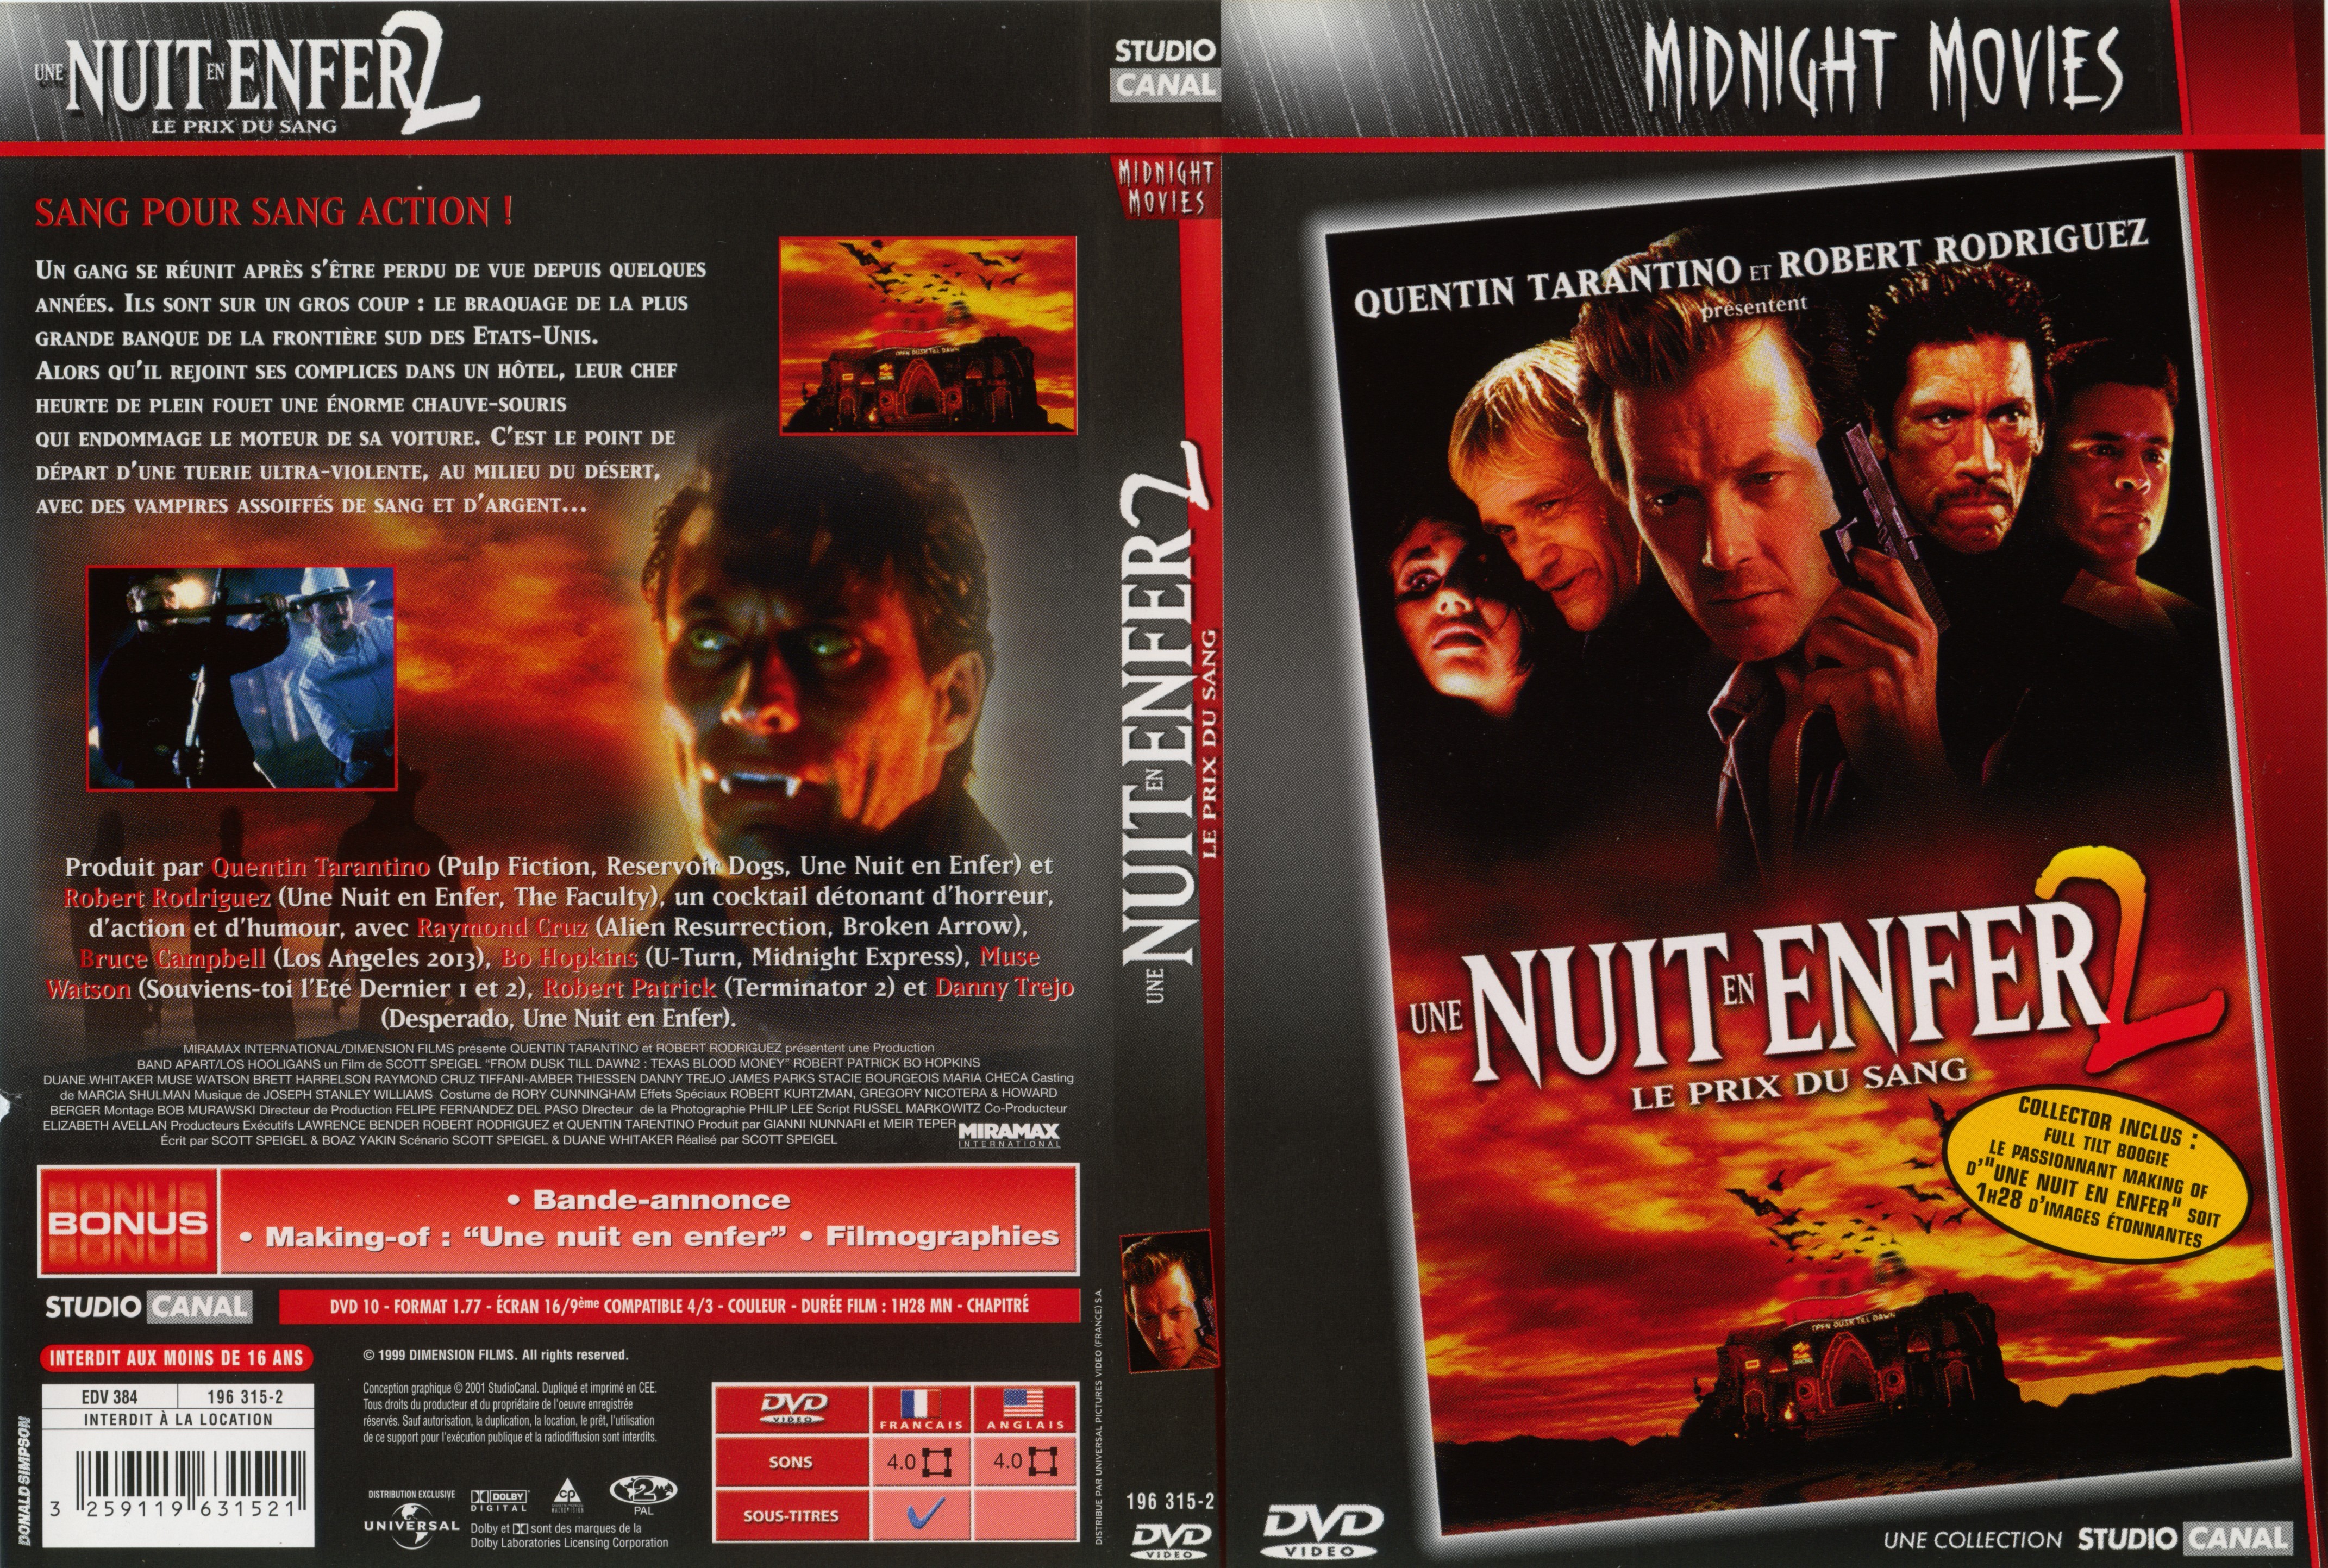 Jaquette DVD Une nuit en enfer 2 v2